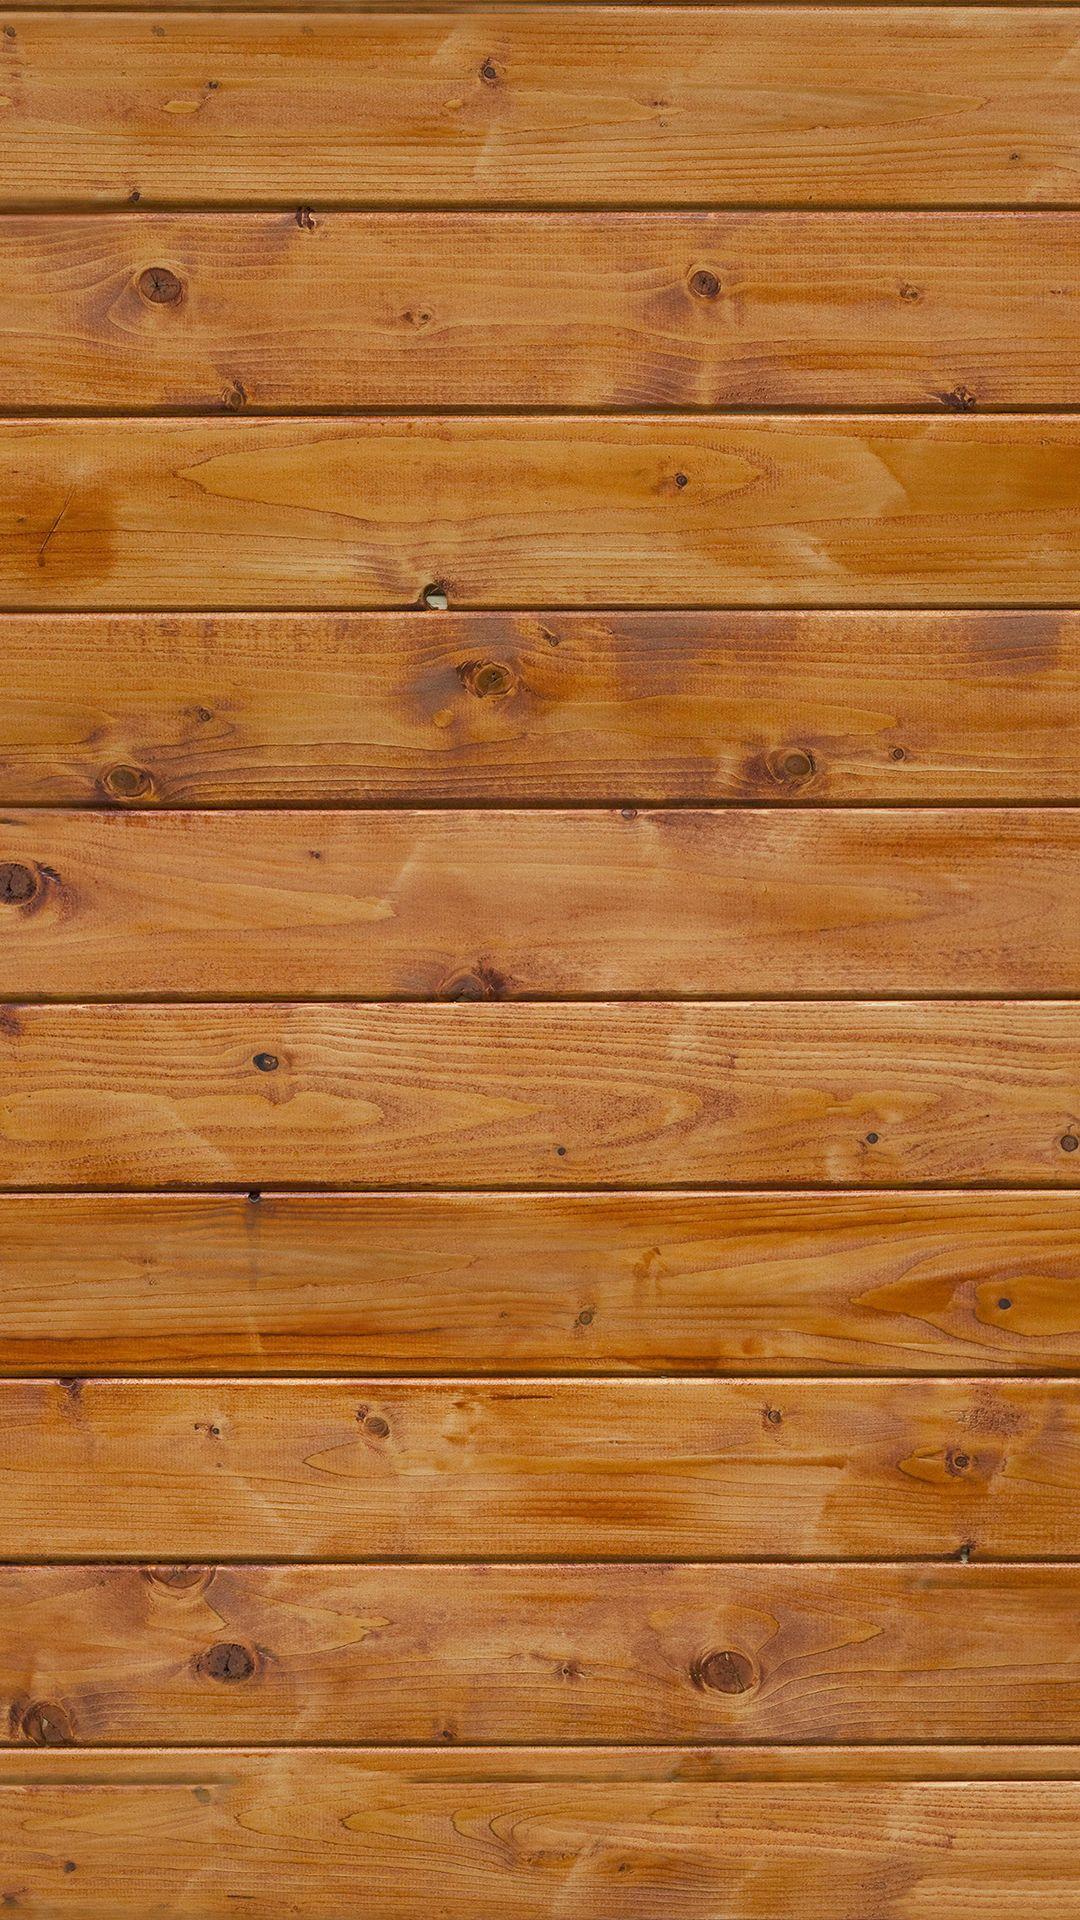 Wood Plank Texture Pattern IPhone 6 Wallpaper Download. IPhone Wallpaper, IPad Wallpaper One Stop Download. Wood Wallpaper, Wood Plank Wallpaper, Wood Texture